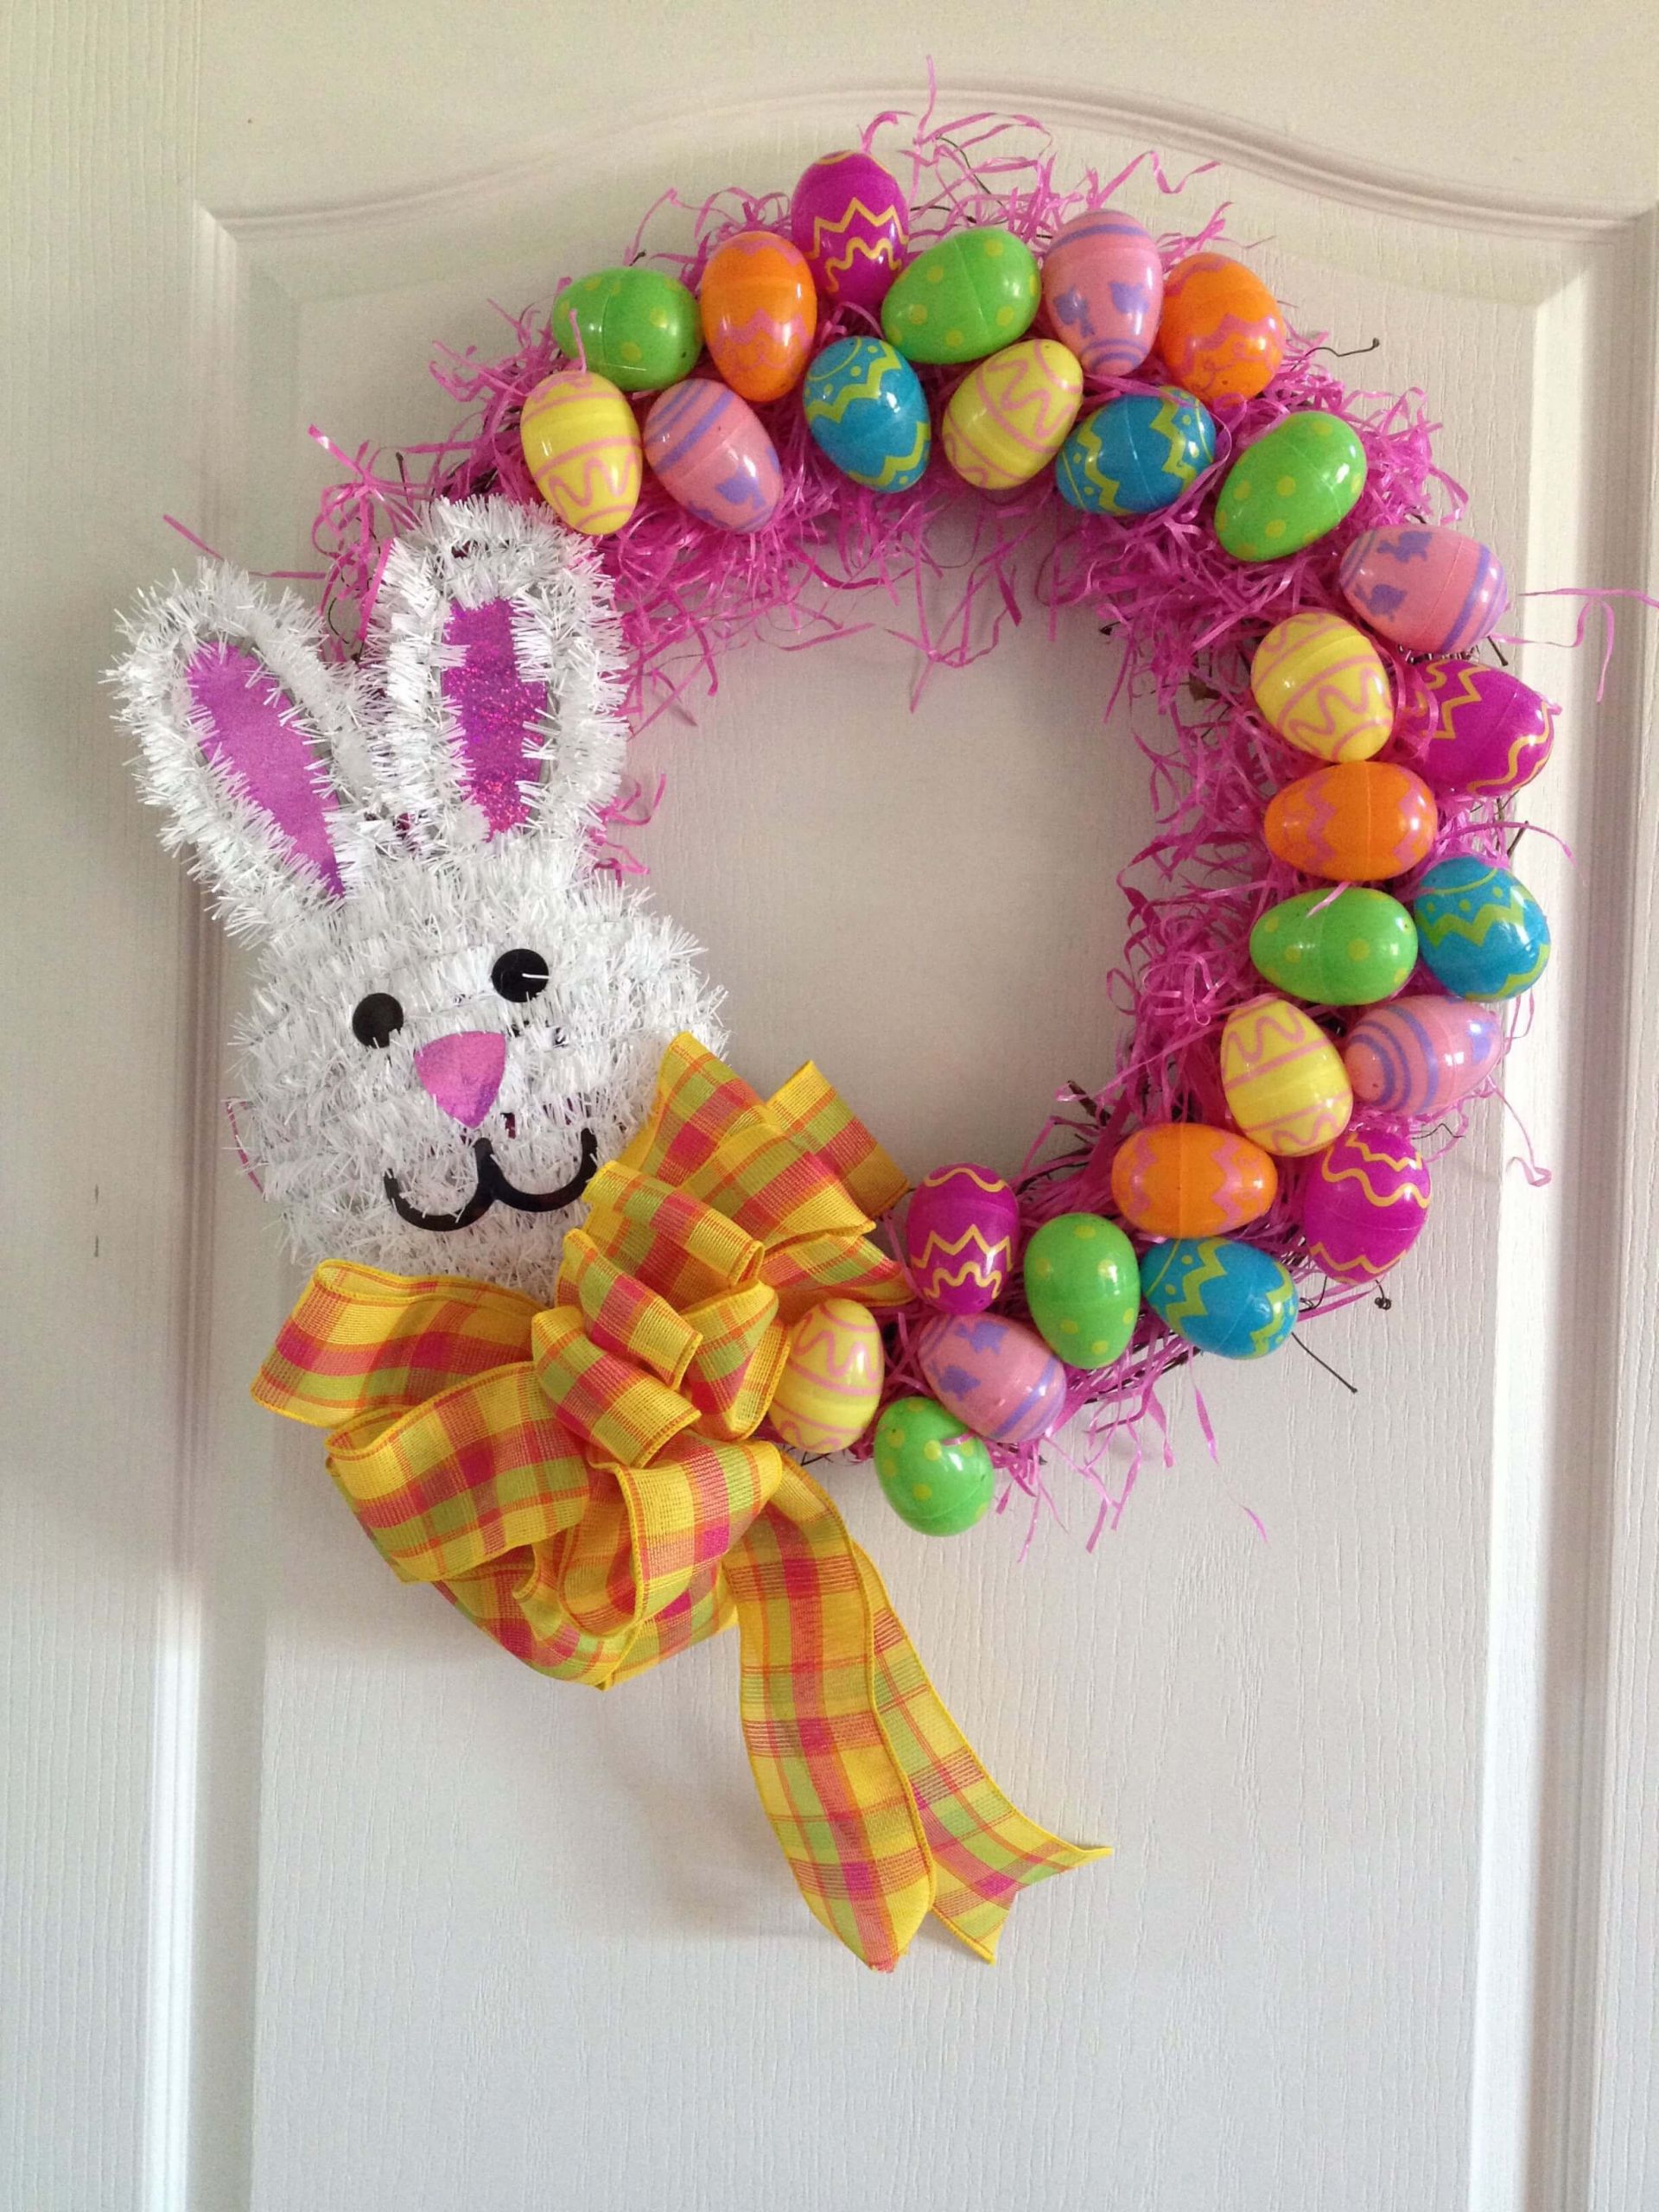 Easter Pinterest Ideas
 10 DIY Easter Wreath Ideas To Brighten The Entrance